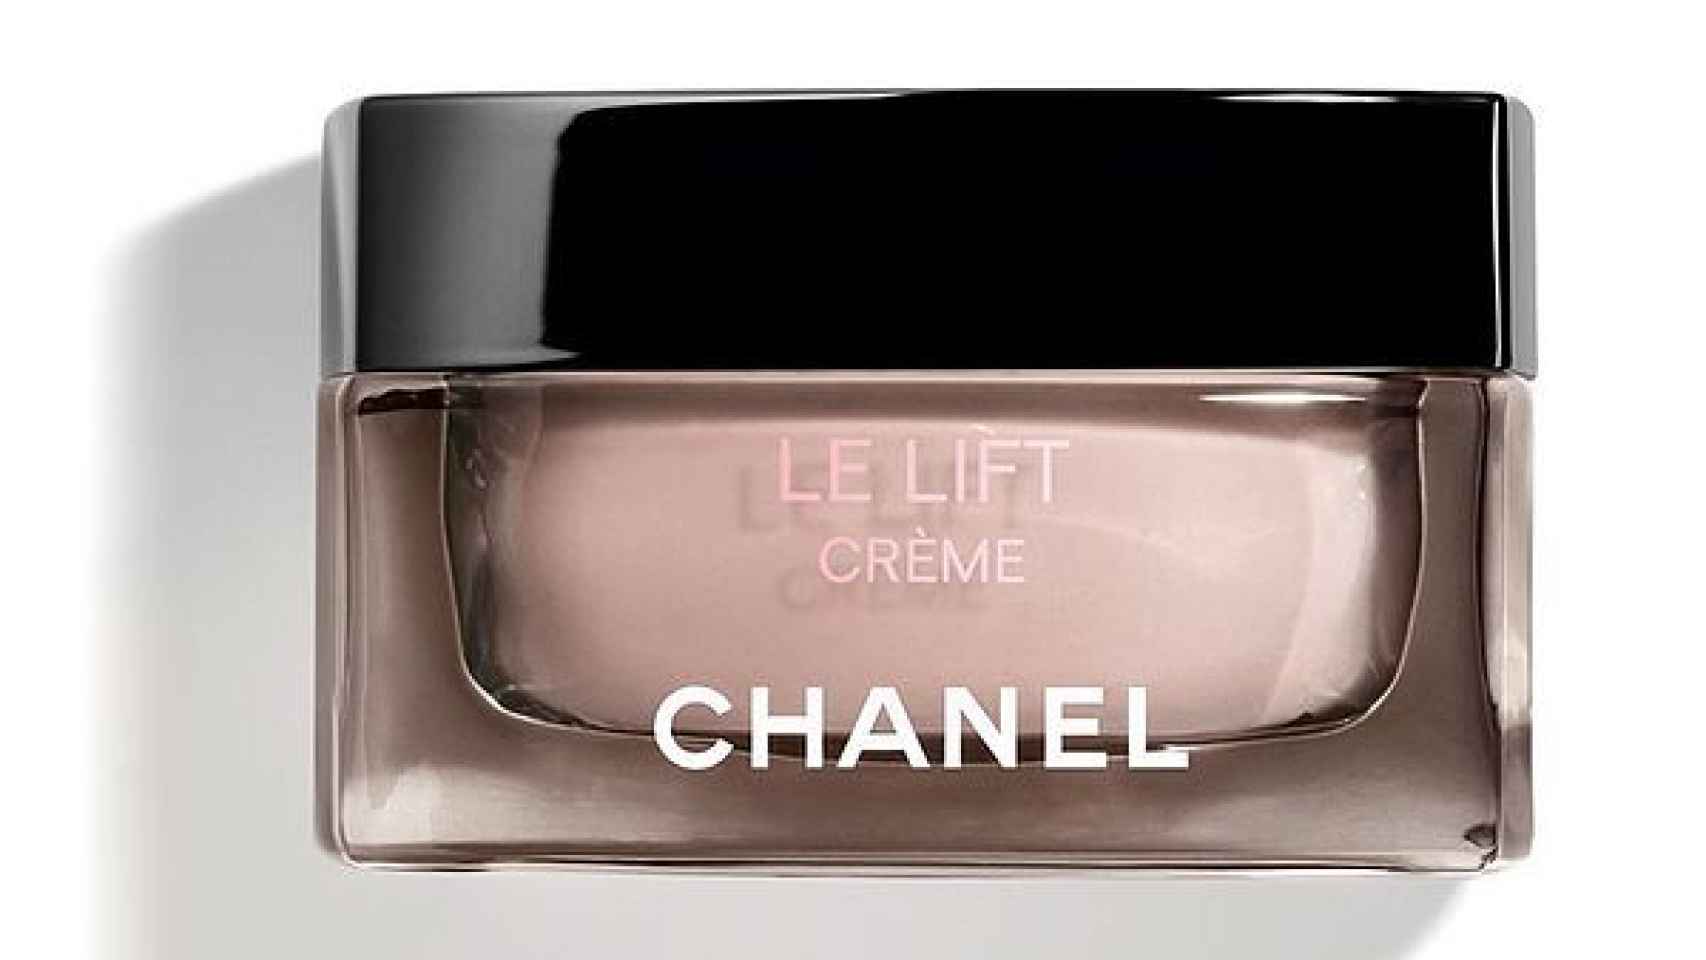 Le Lift de Chanel